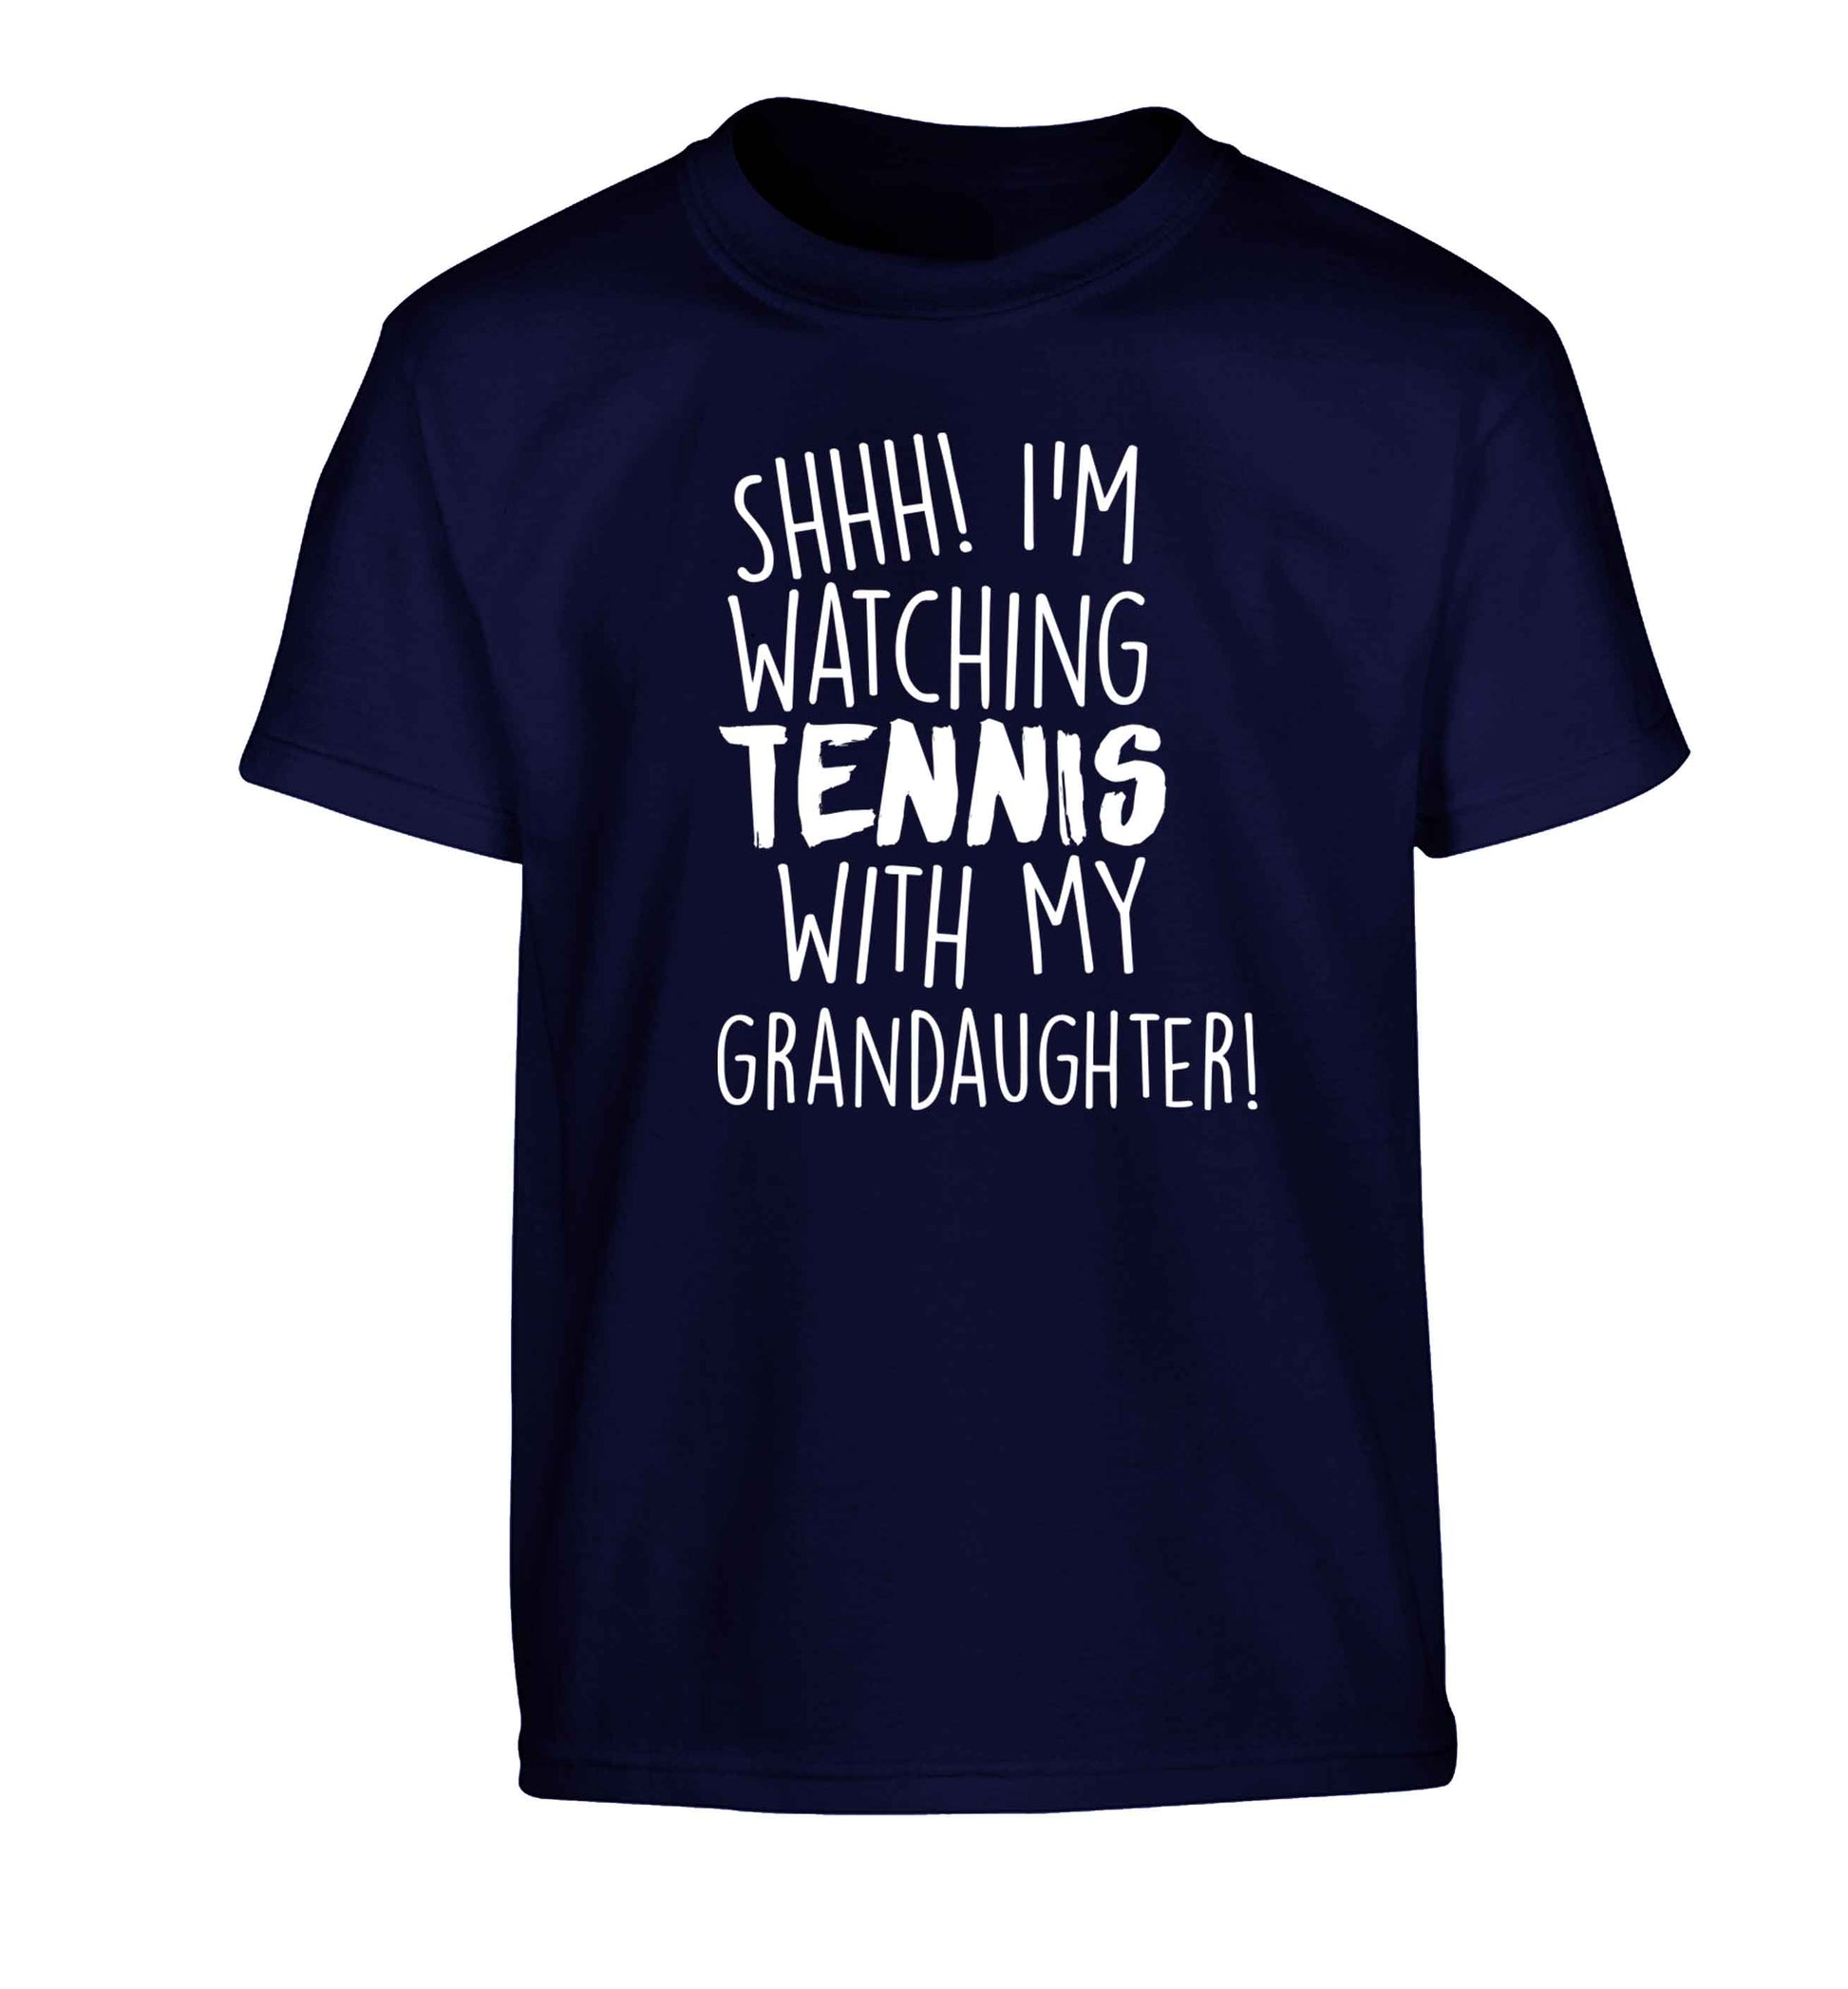 Shh! I'm watching tennis with my granddaughter! Children's navy Tshirt 12-13 Years